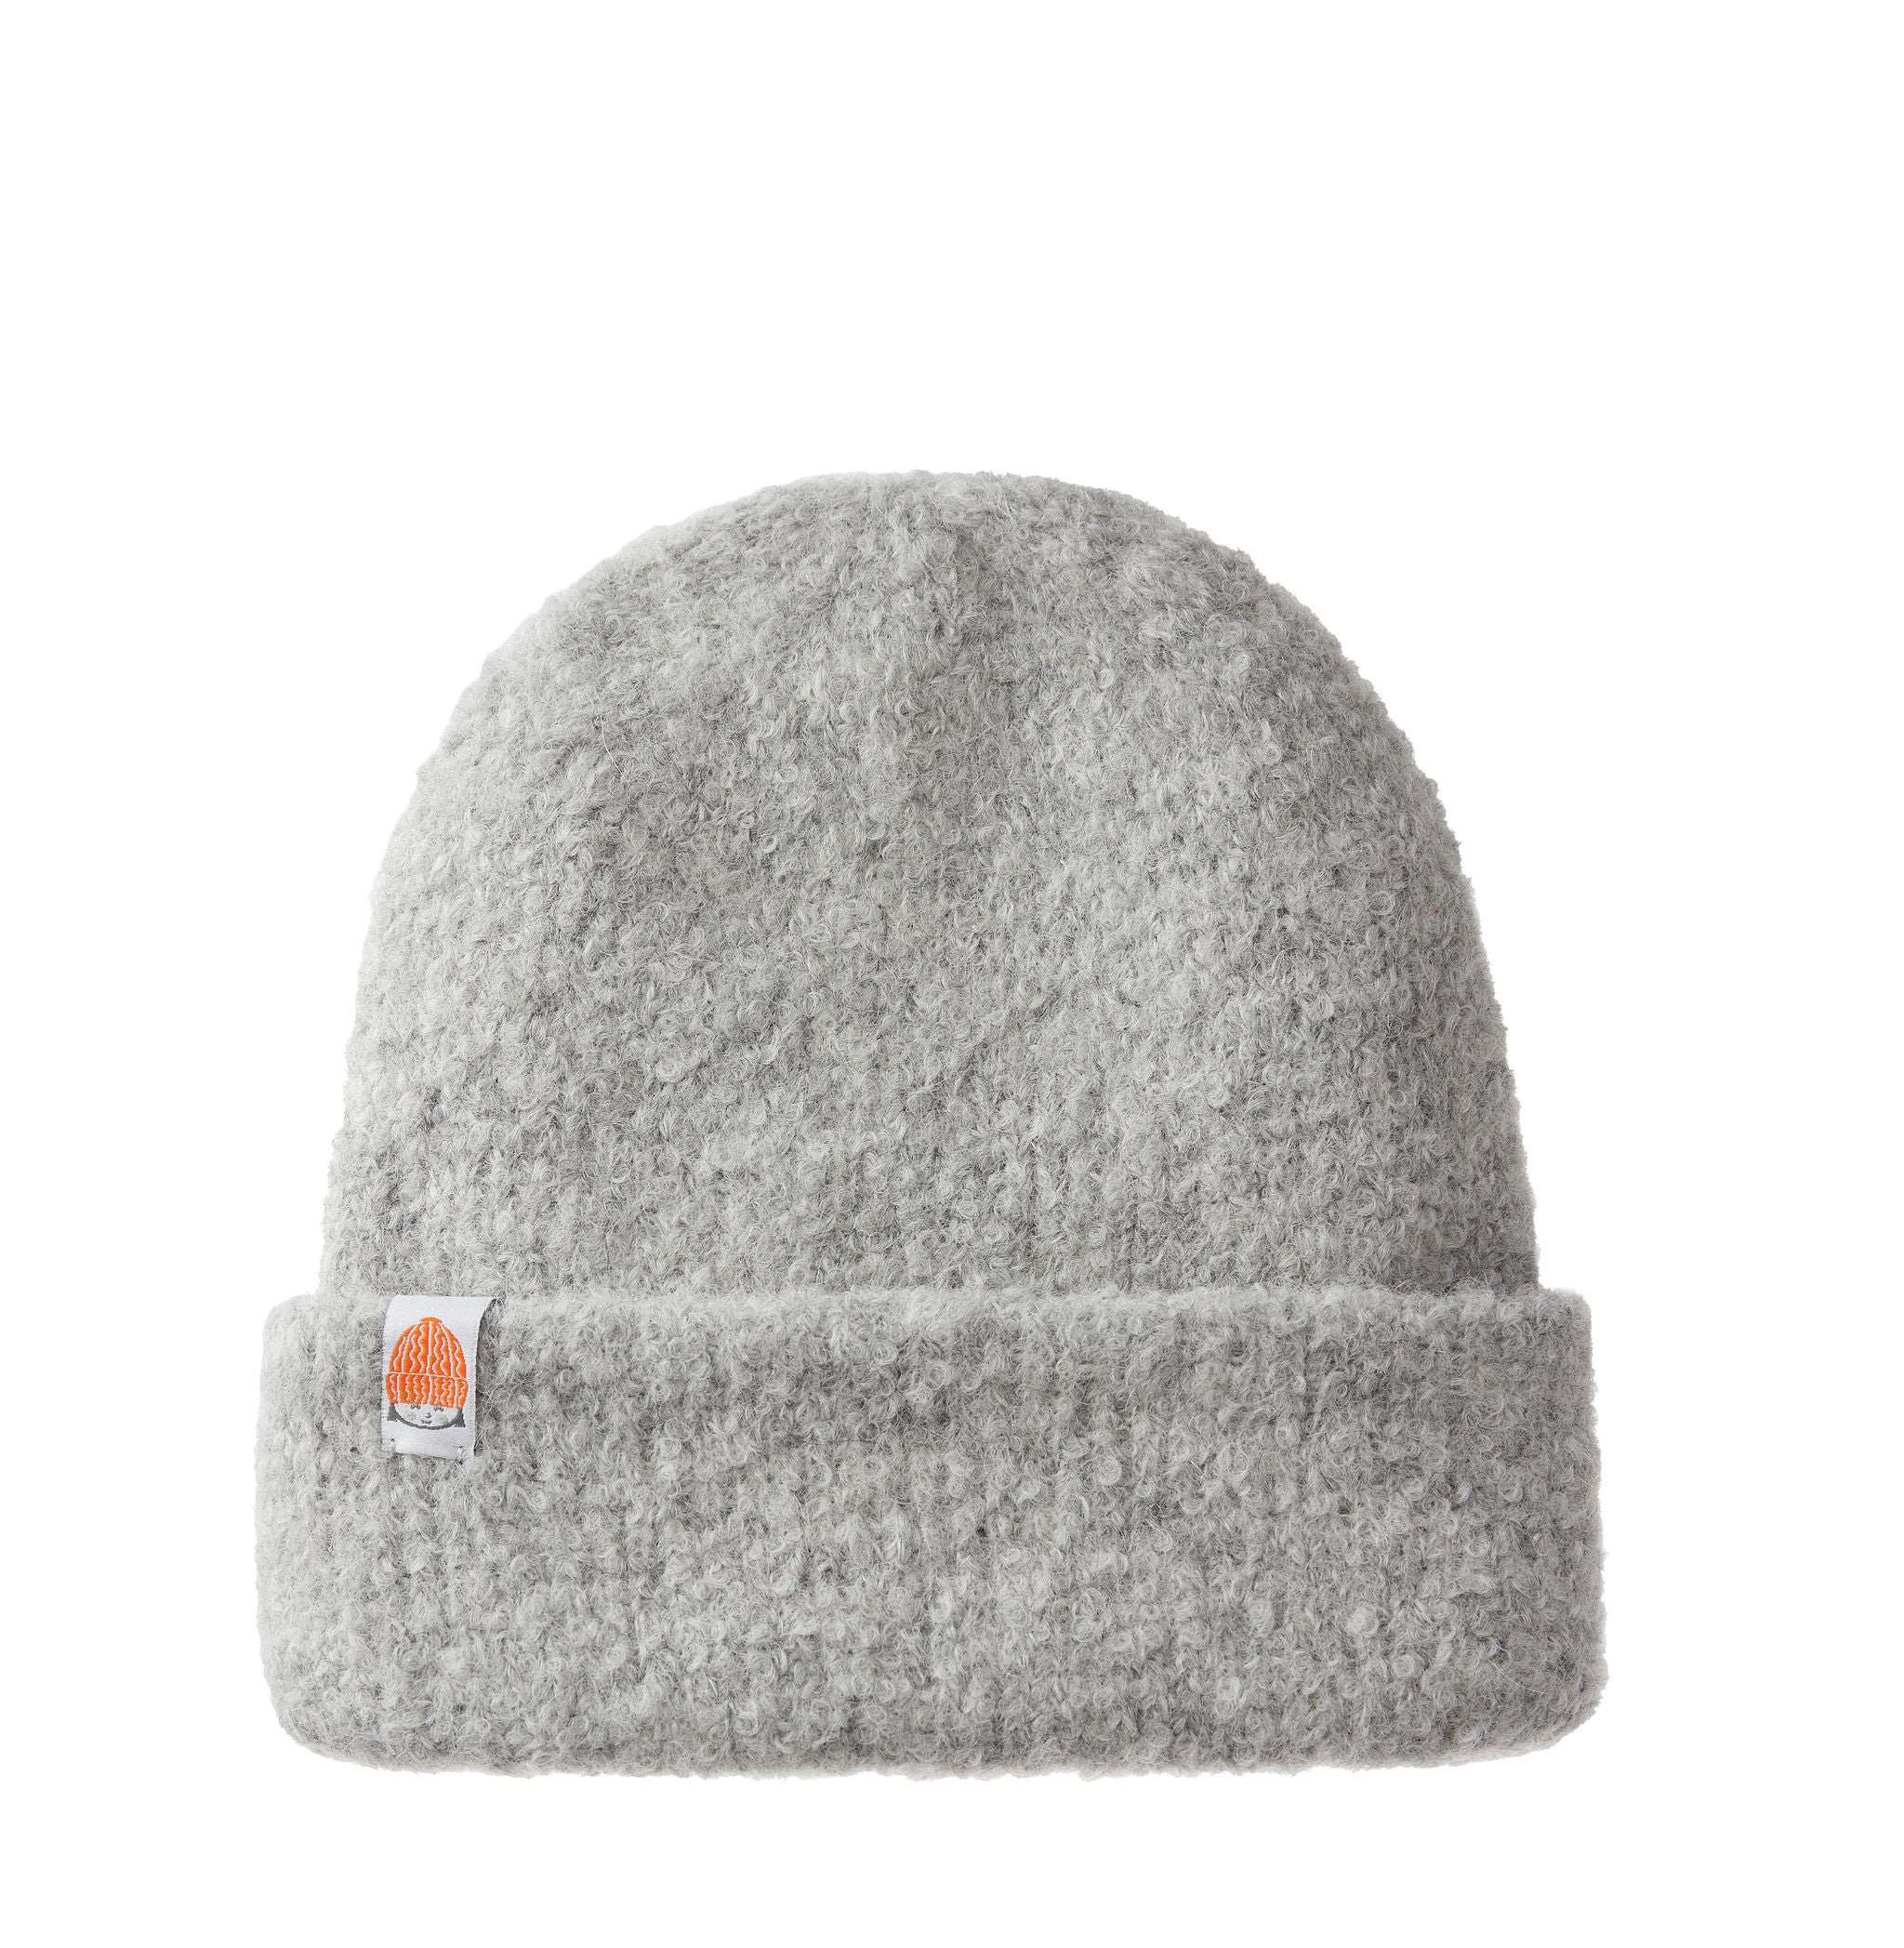 Teddy Alpaca Beanie Sh*t I Winter Knit | | Hats The Wool That